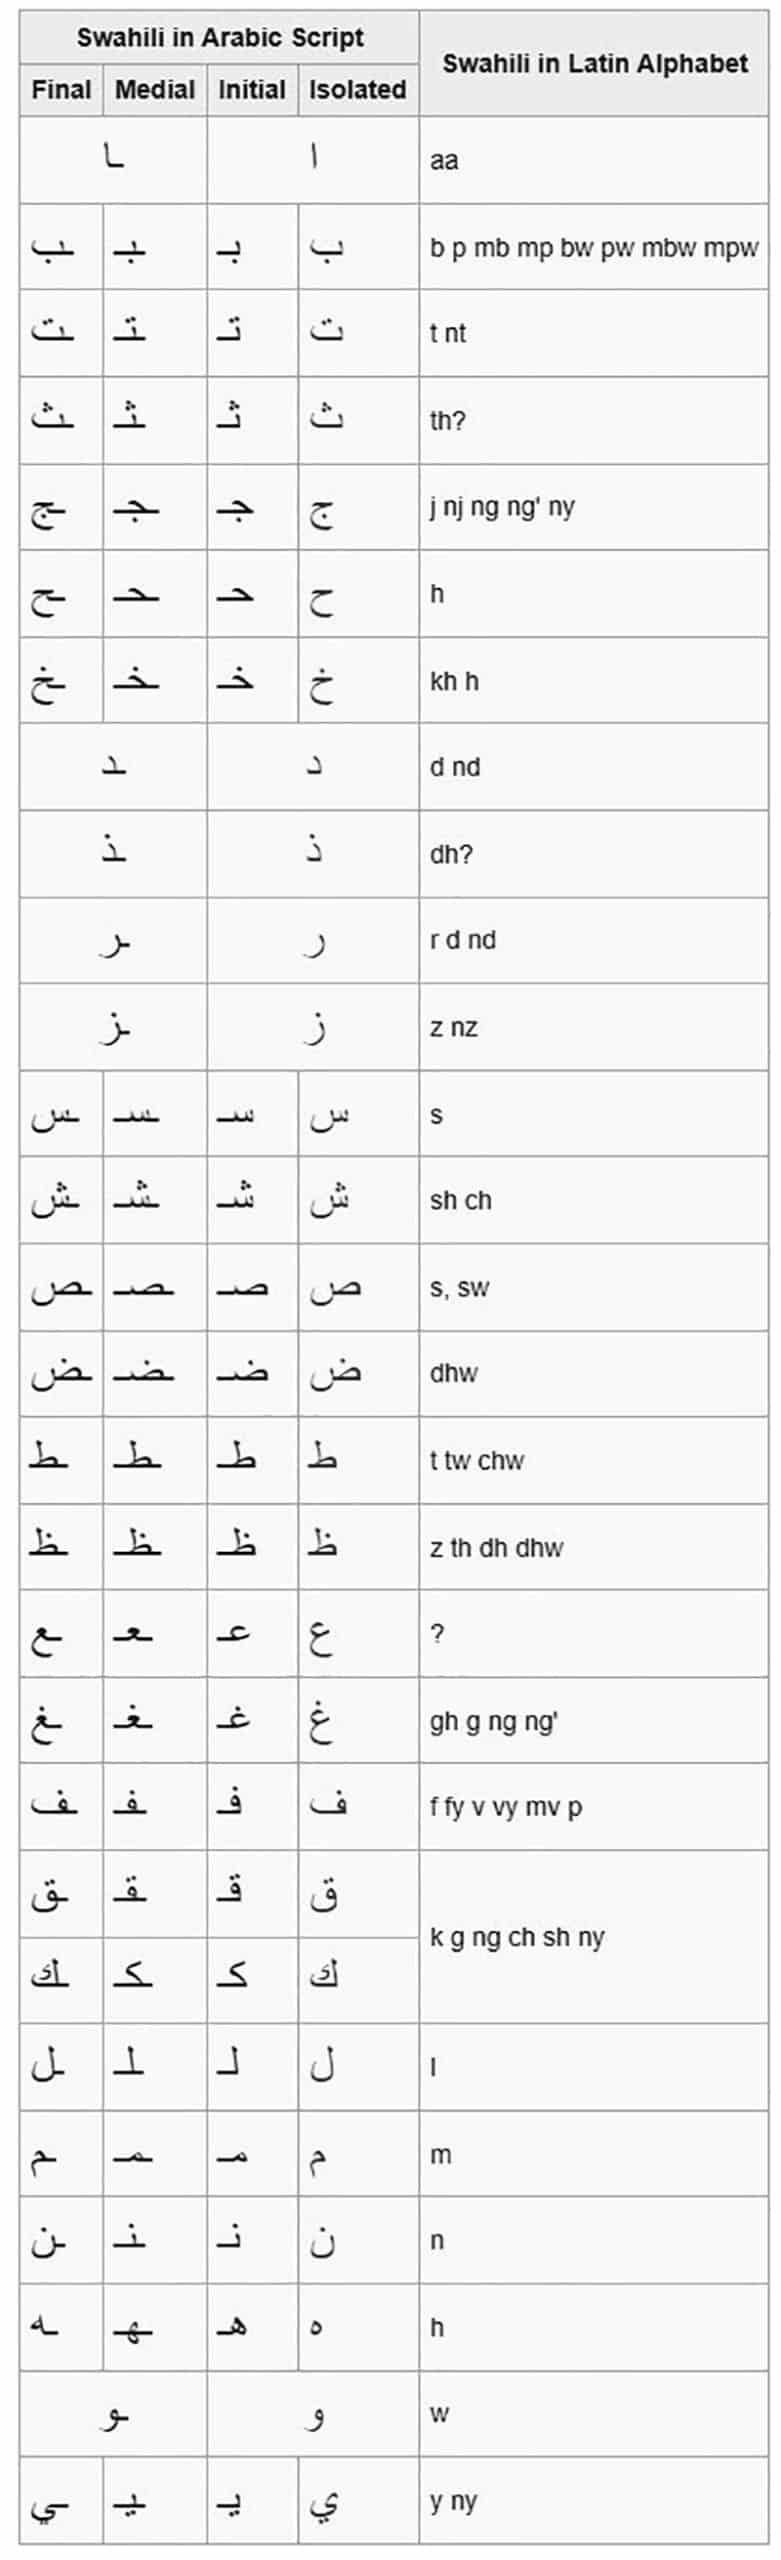 Swahili language orthography